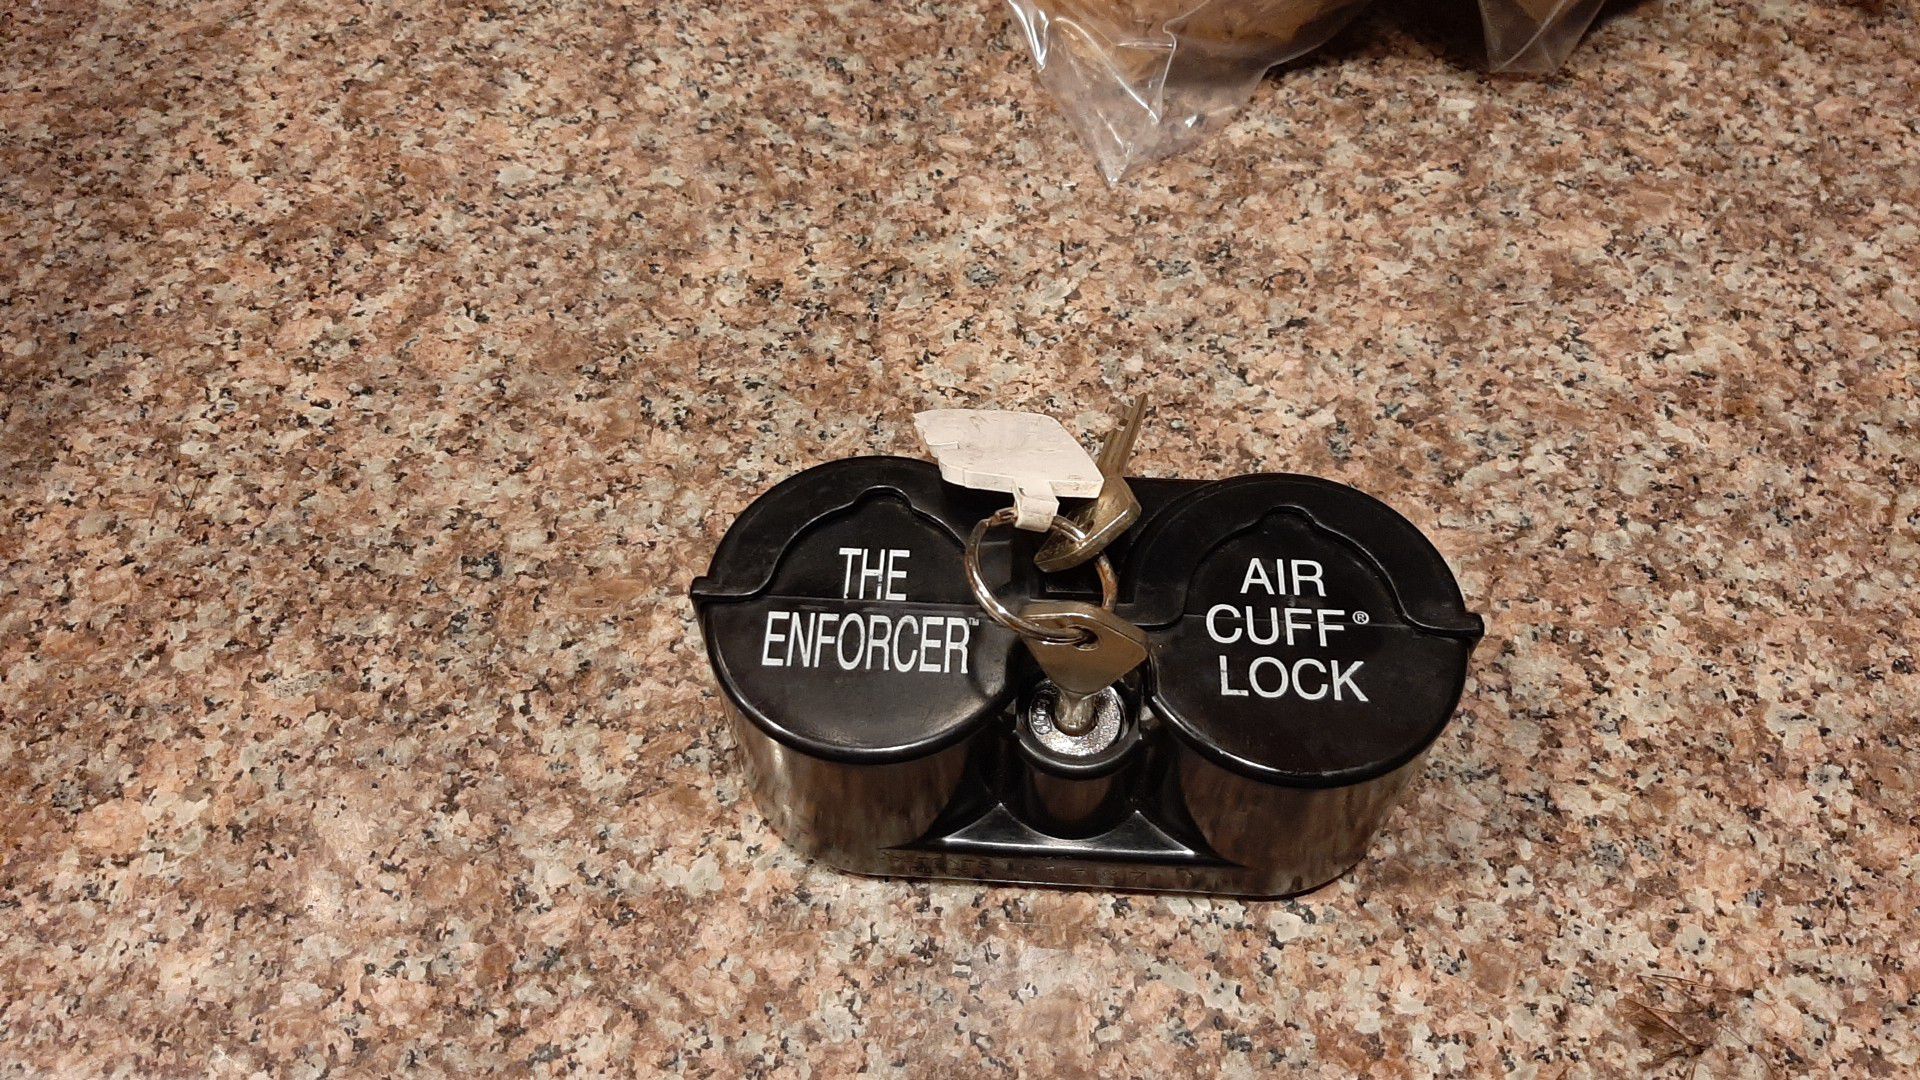 Enforcer Air Cuff Lock